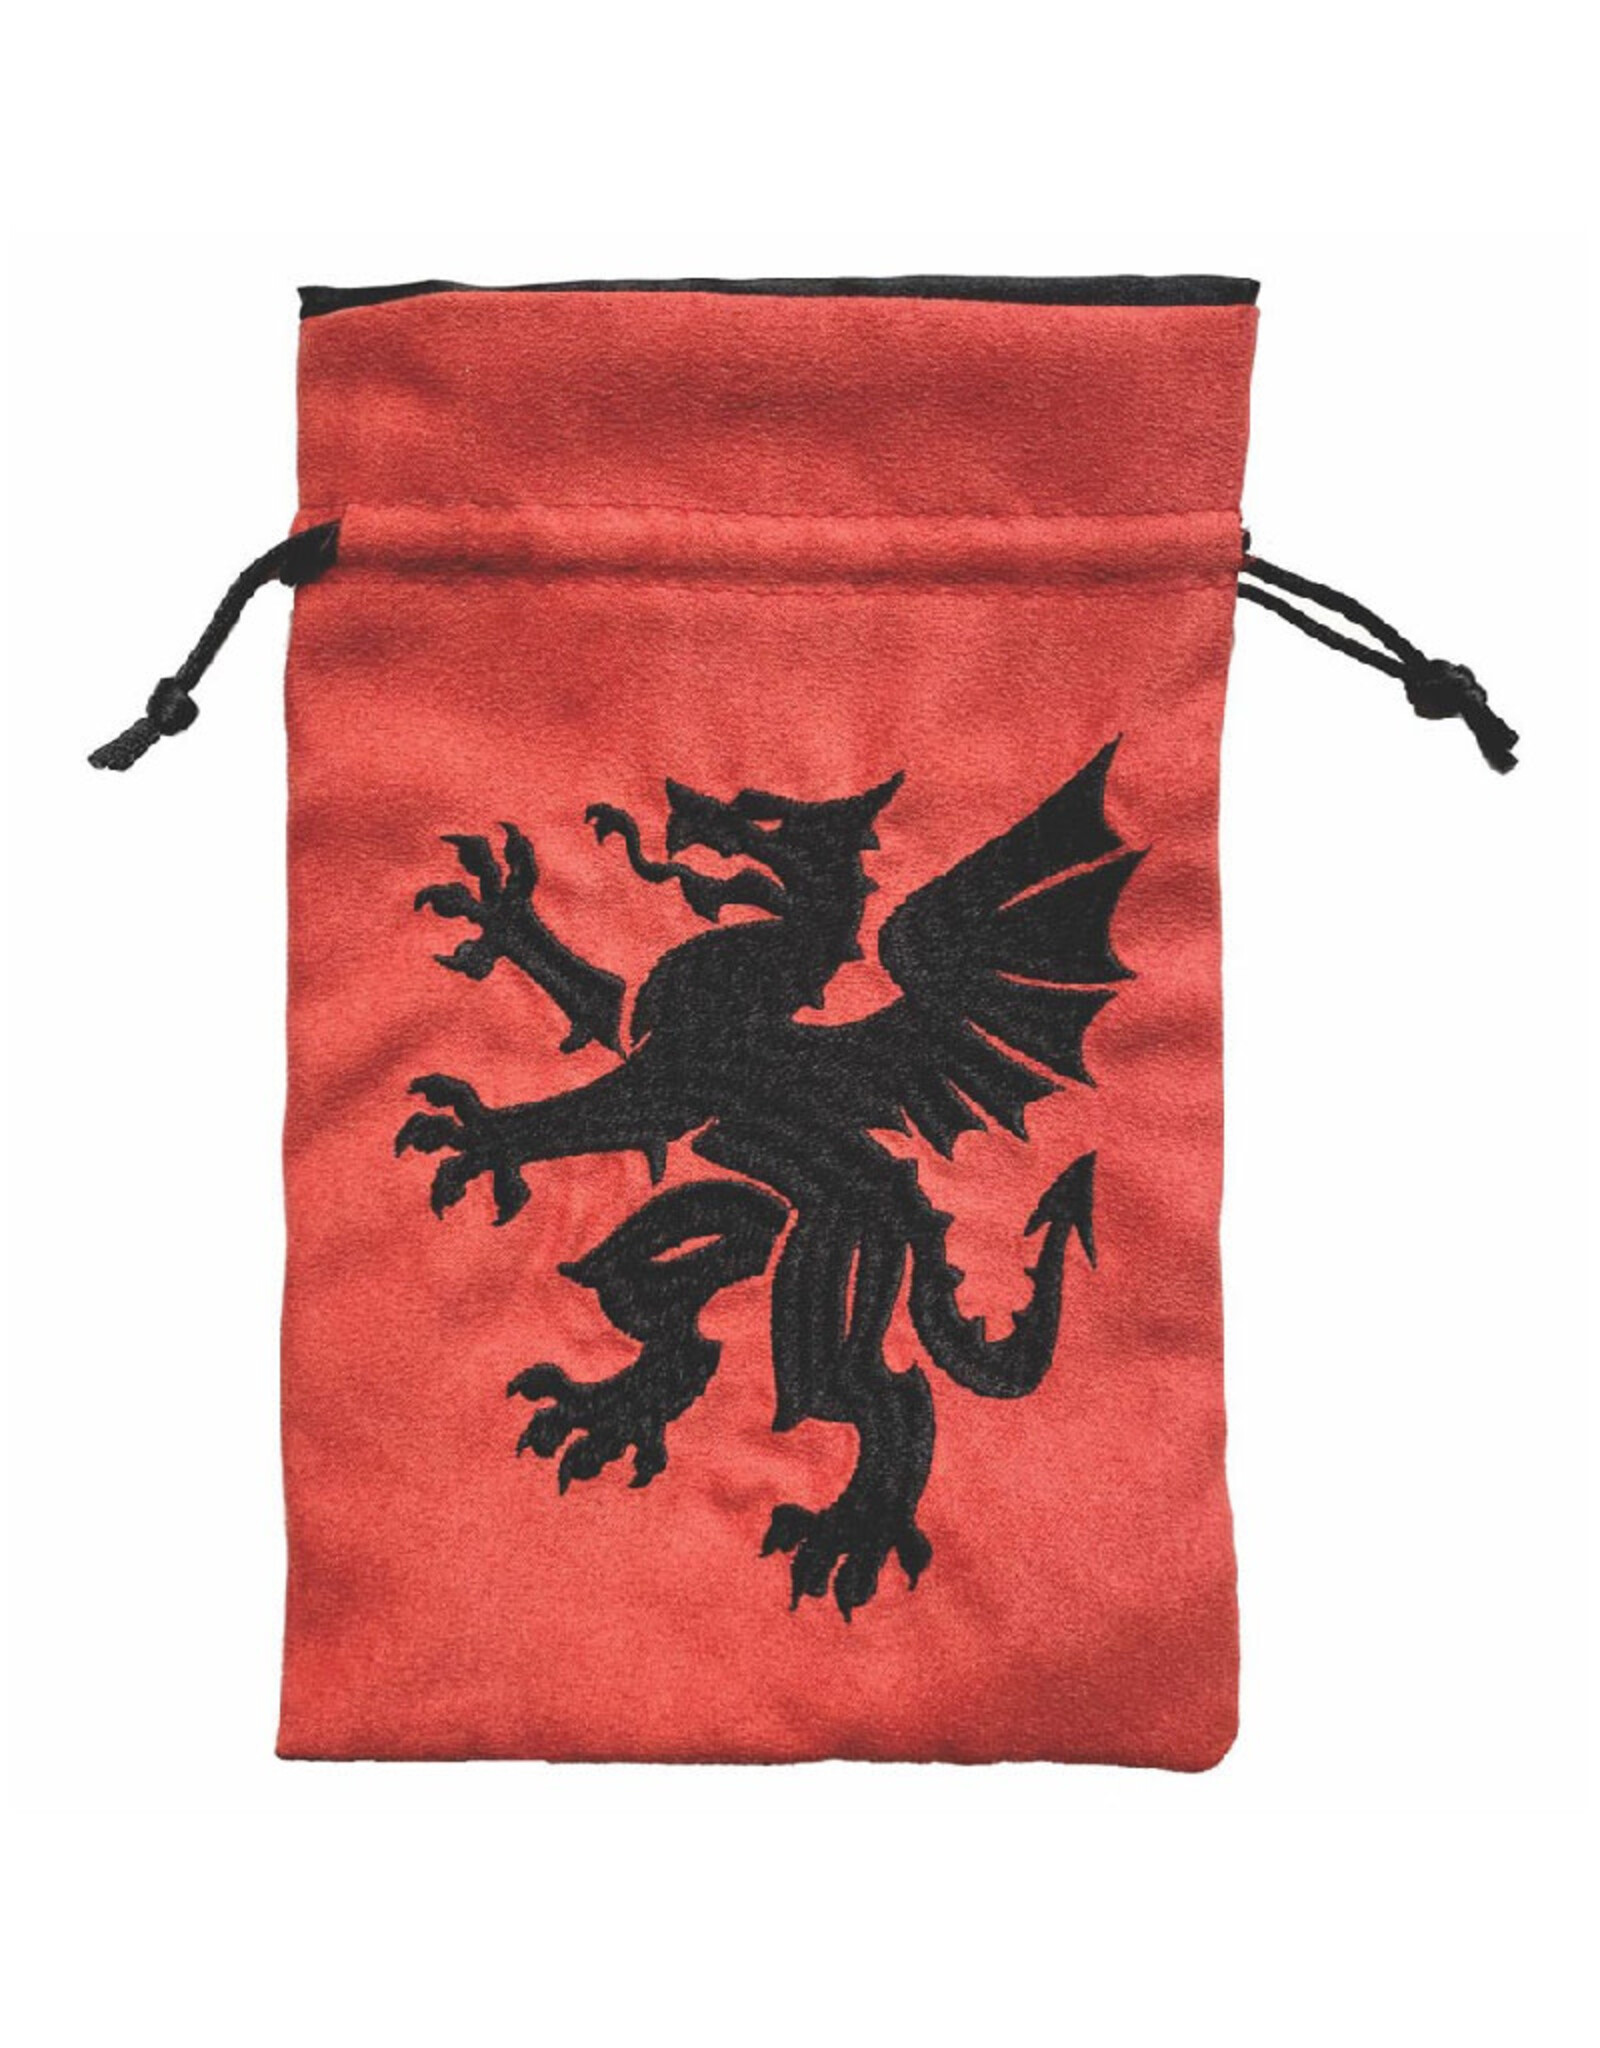 Misc Dice Bag: Heraldry (Dragon)